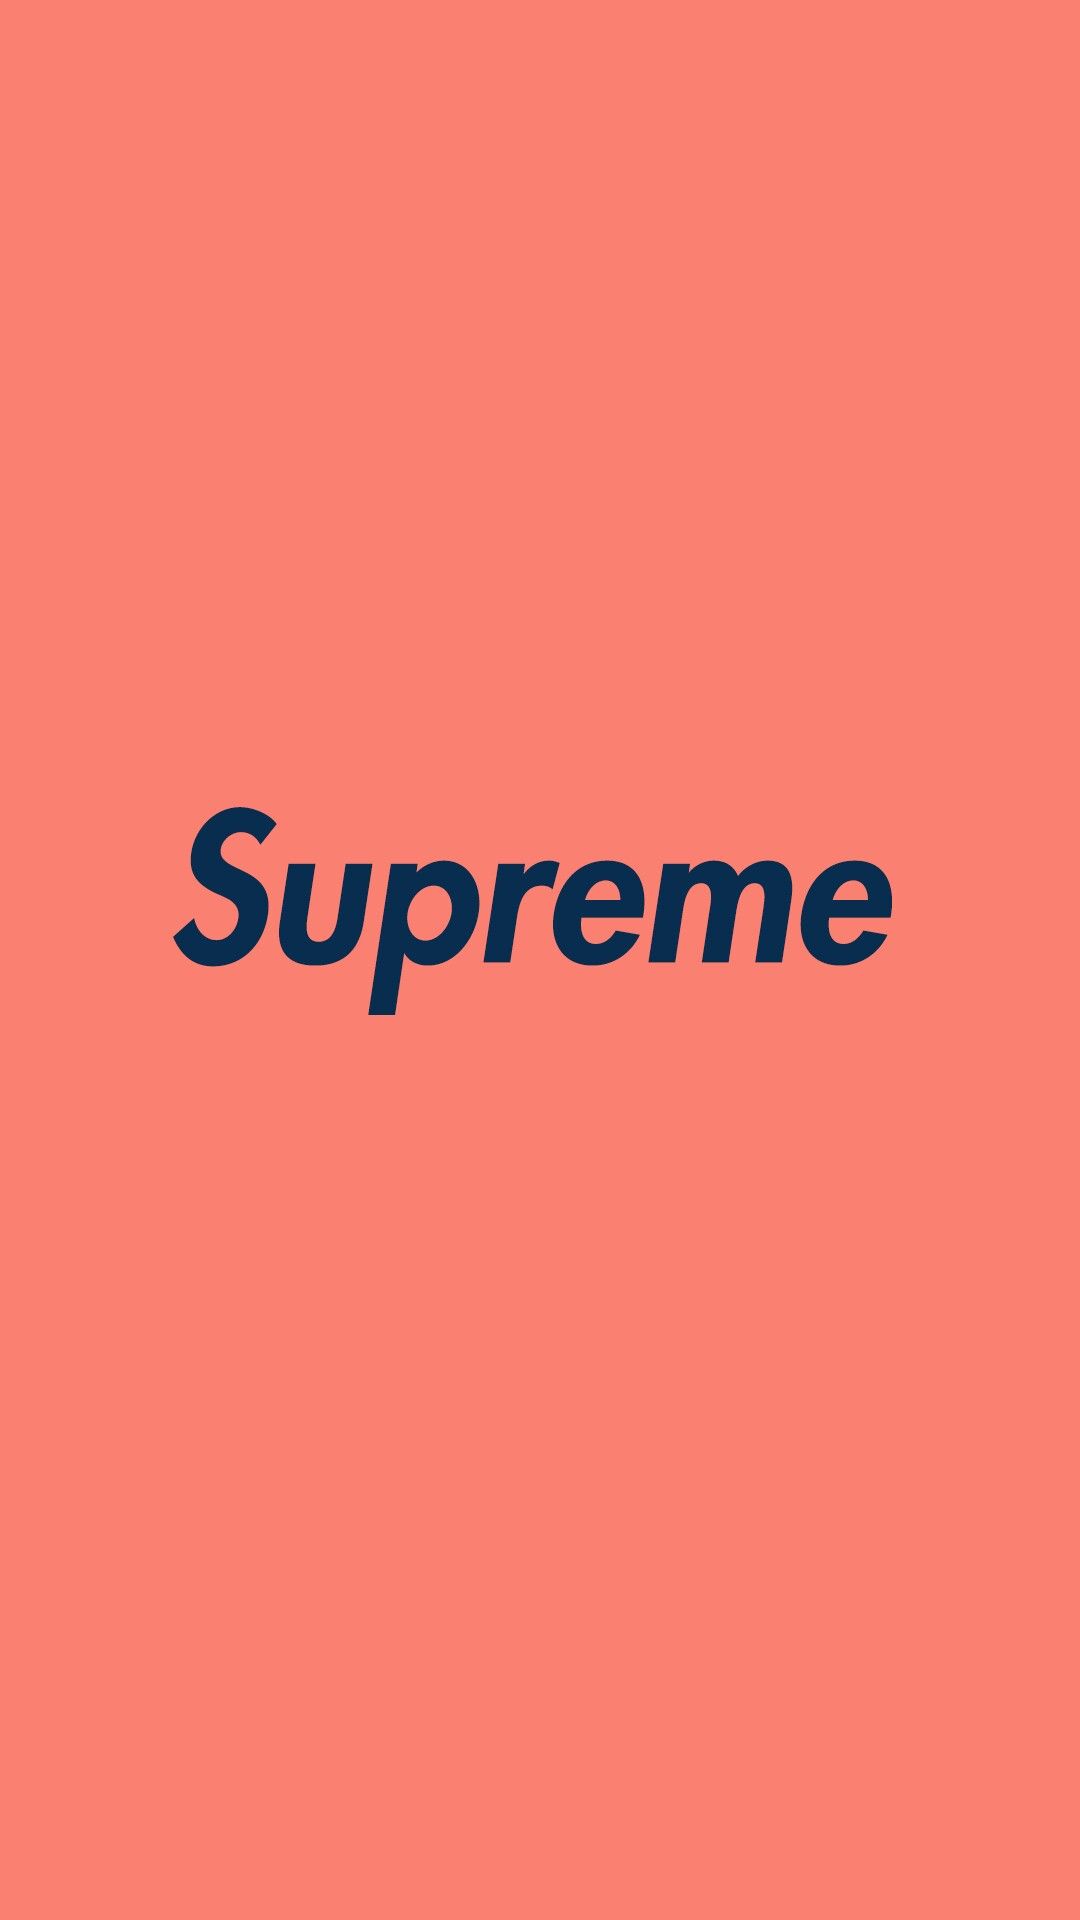 supreme wallpaper,text,red,font,pink,logo